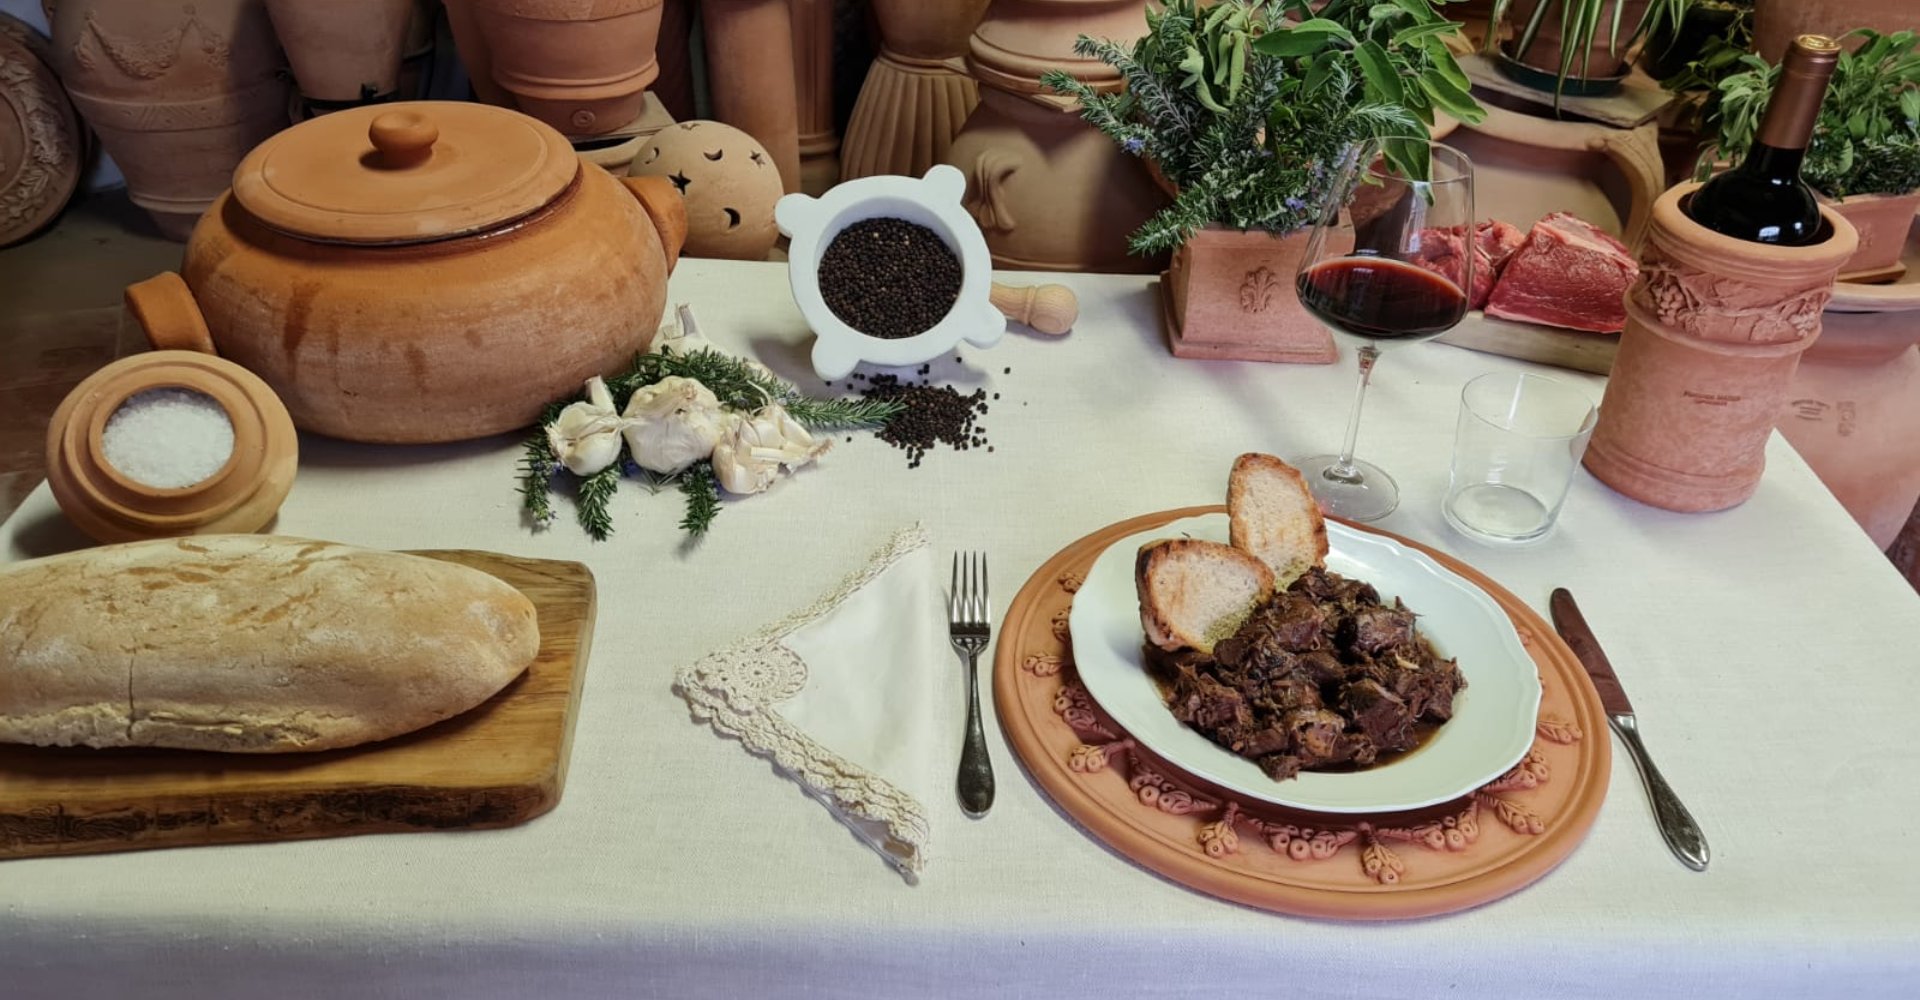 Peposo, typical Tuscan dish